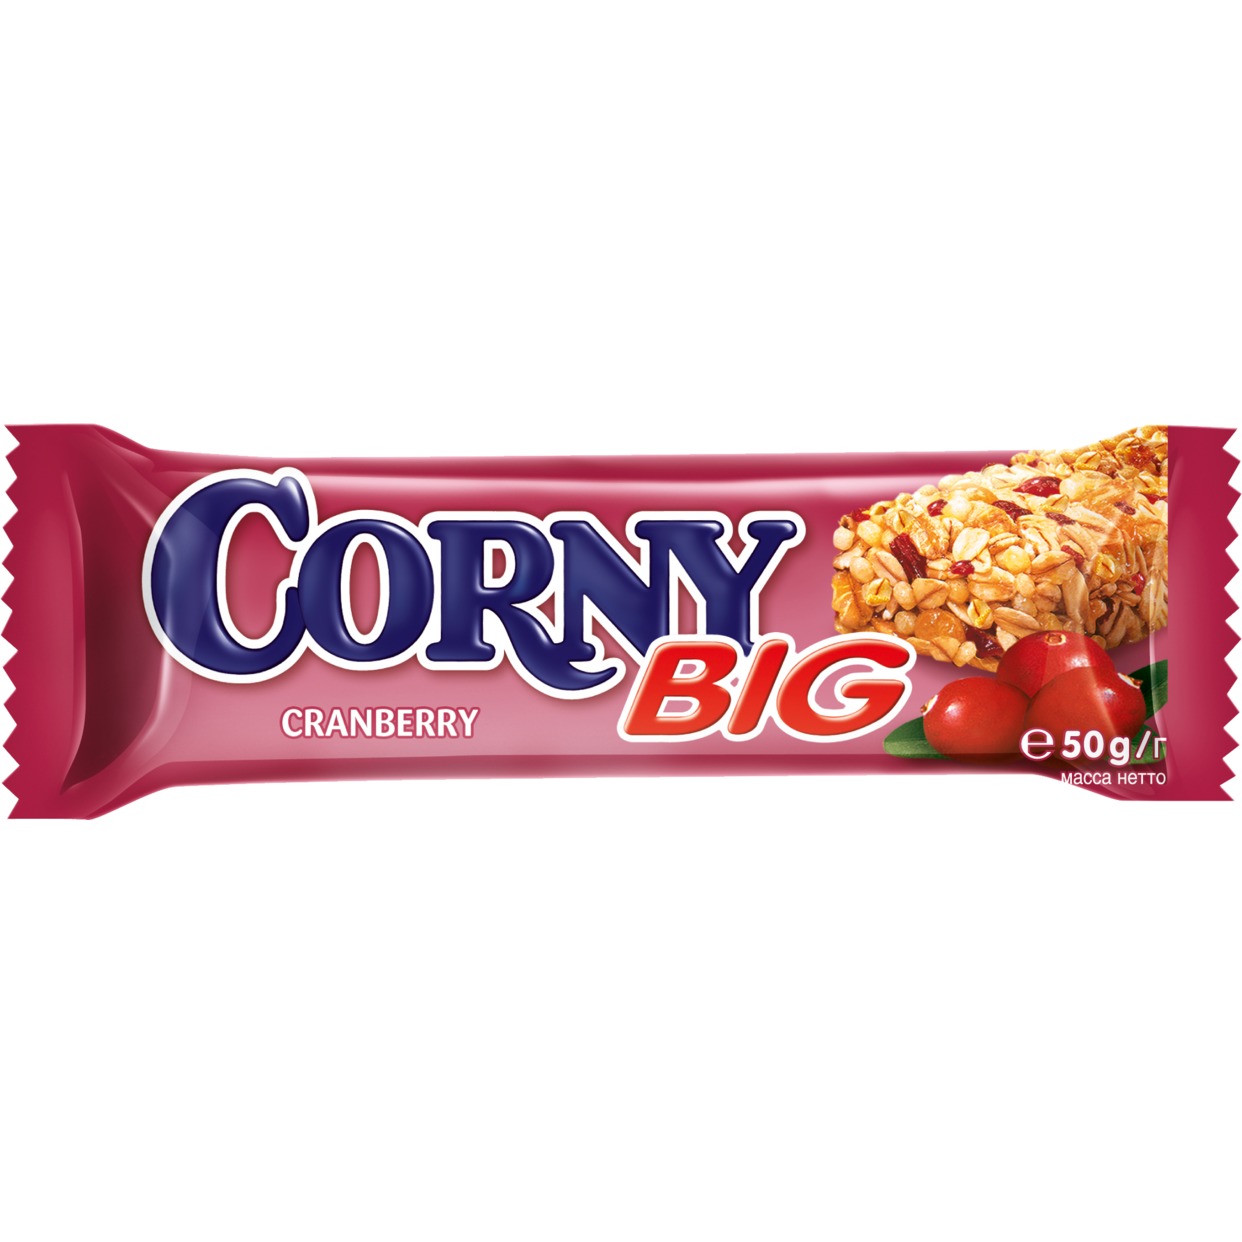 Батончик Corny Big, с rk.rdjq, 50 г по акции в Пятерочке